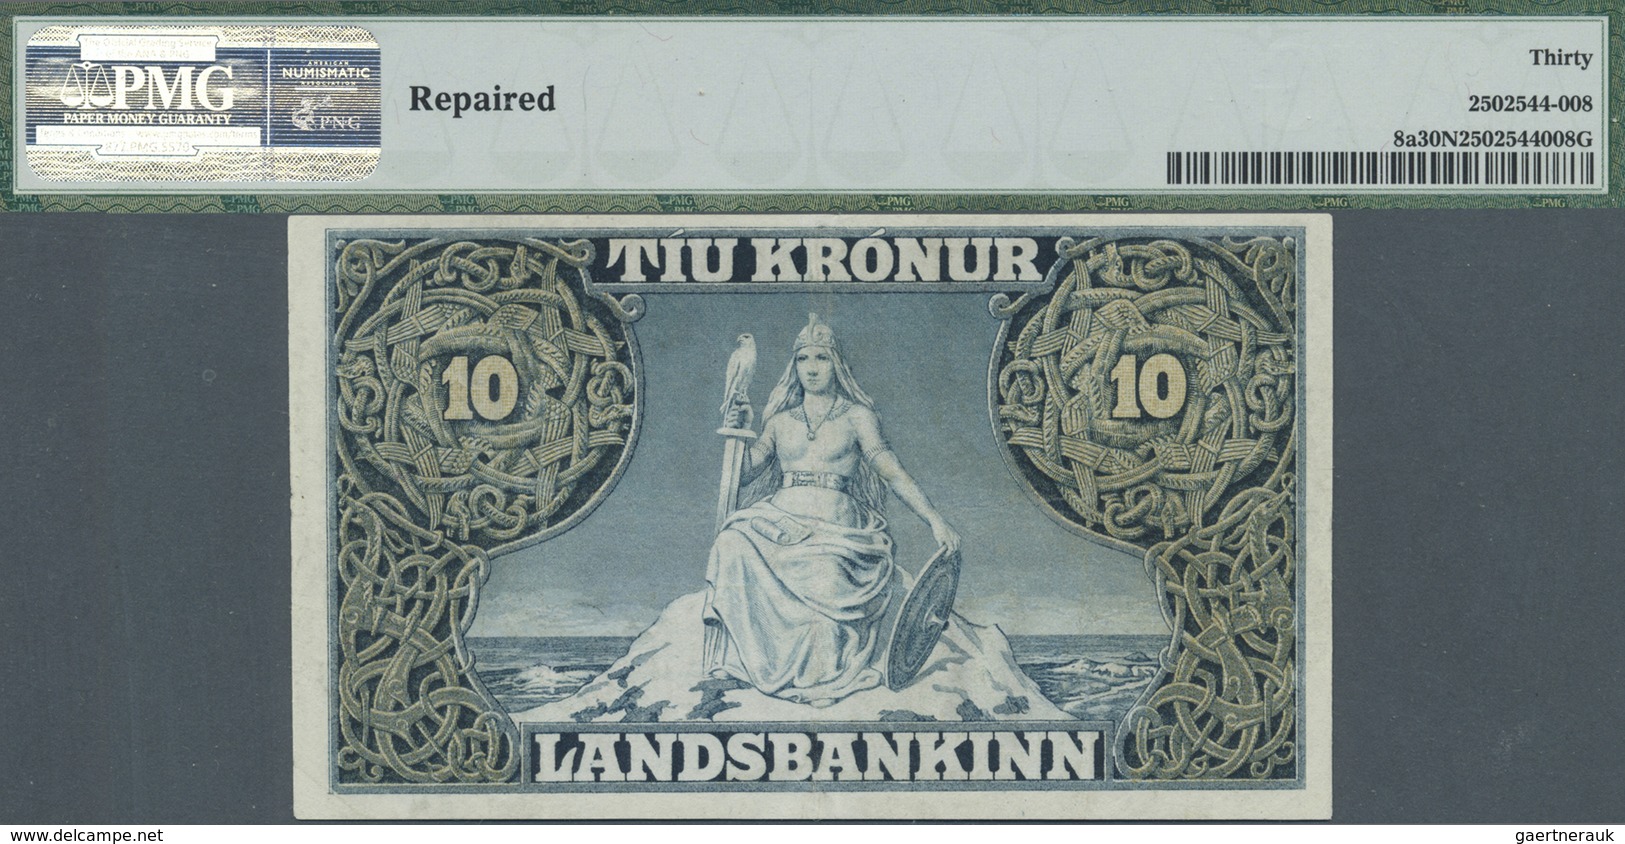 Iceland / Island: 10 Kronur 1900 (ND 1912) P. 8a, Repeater Number, PMG Graded 30 VF NET. - Islanda